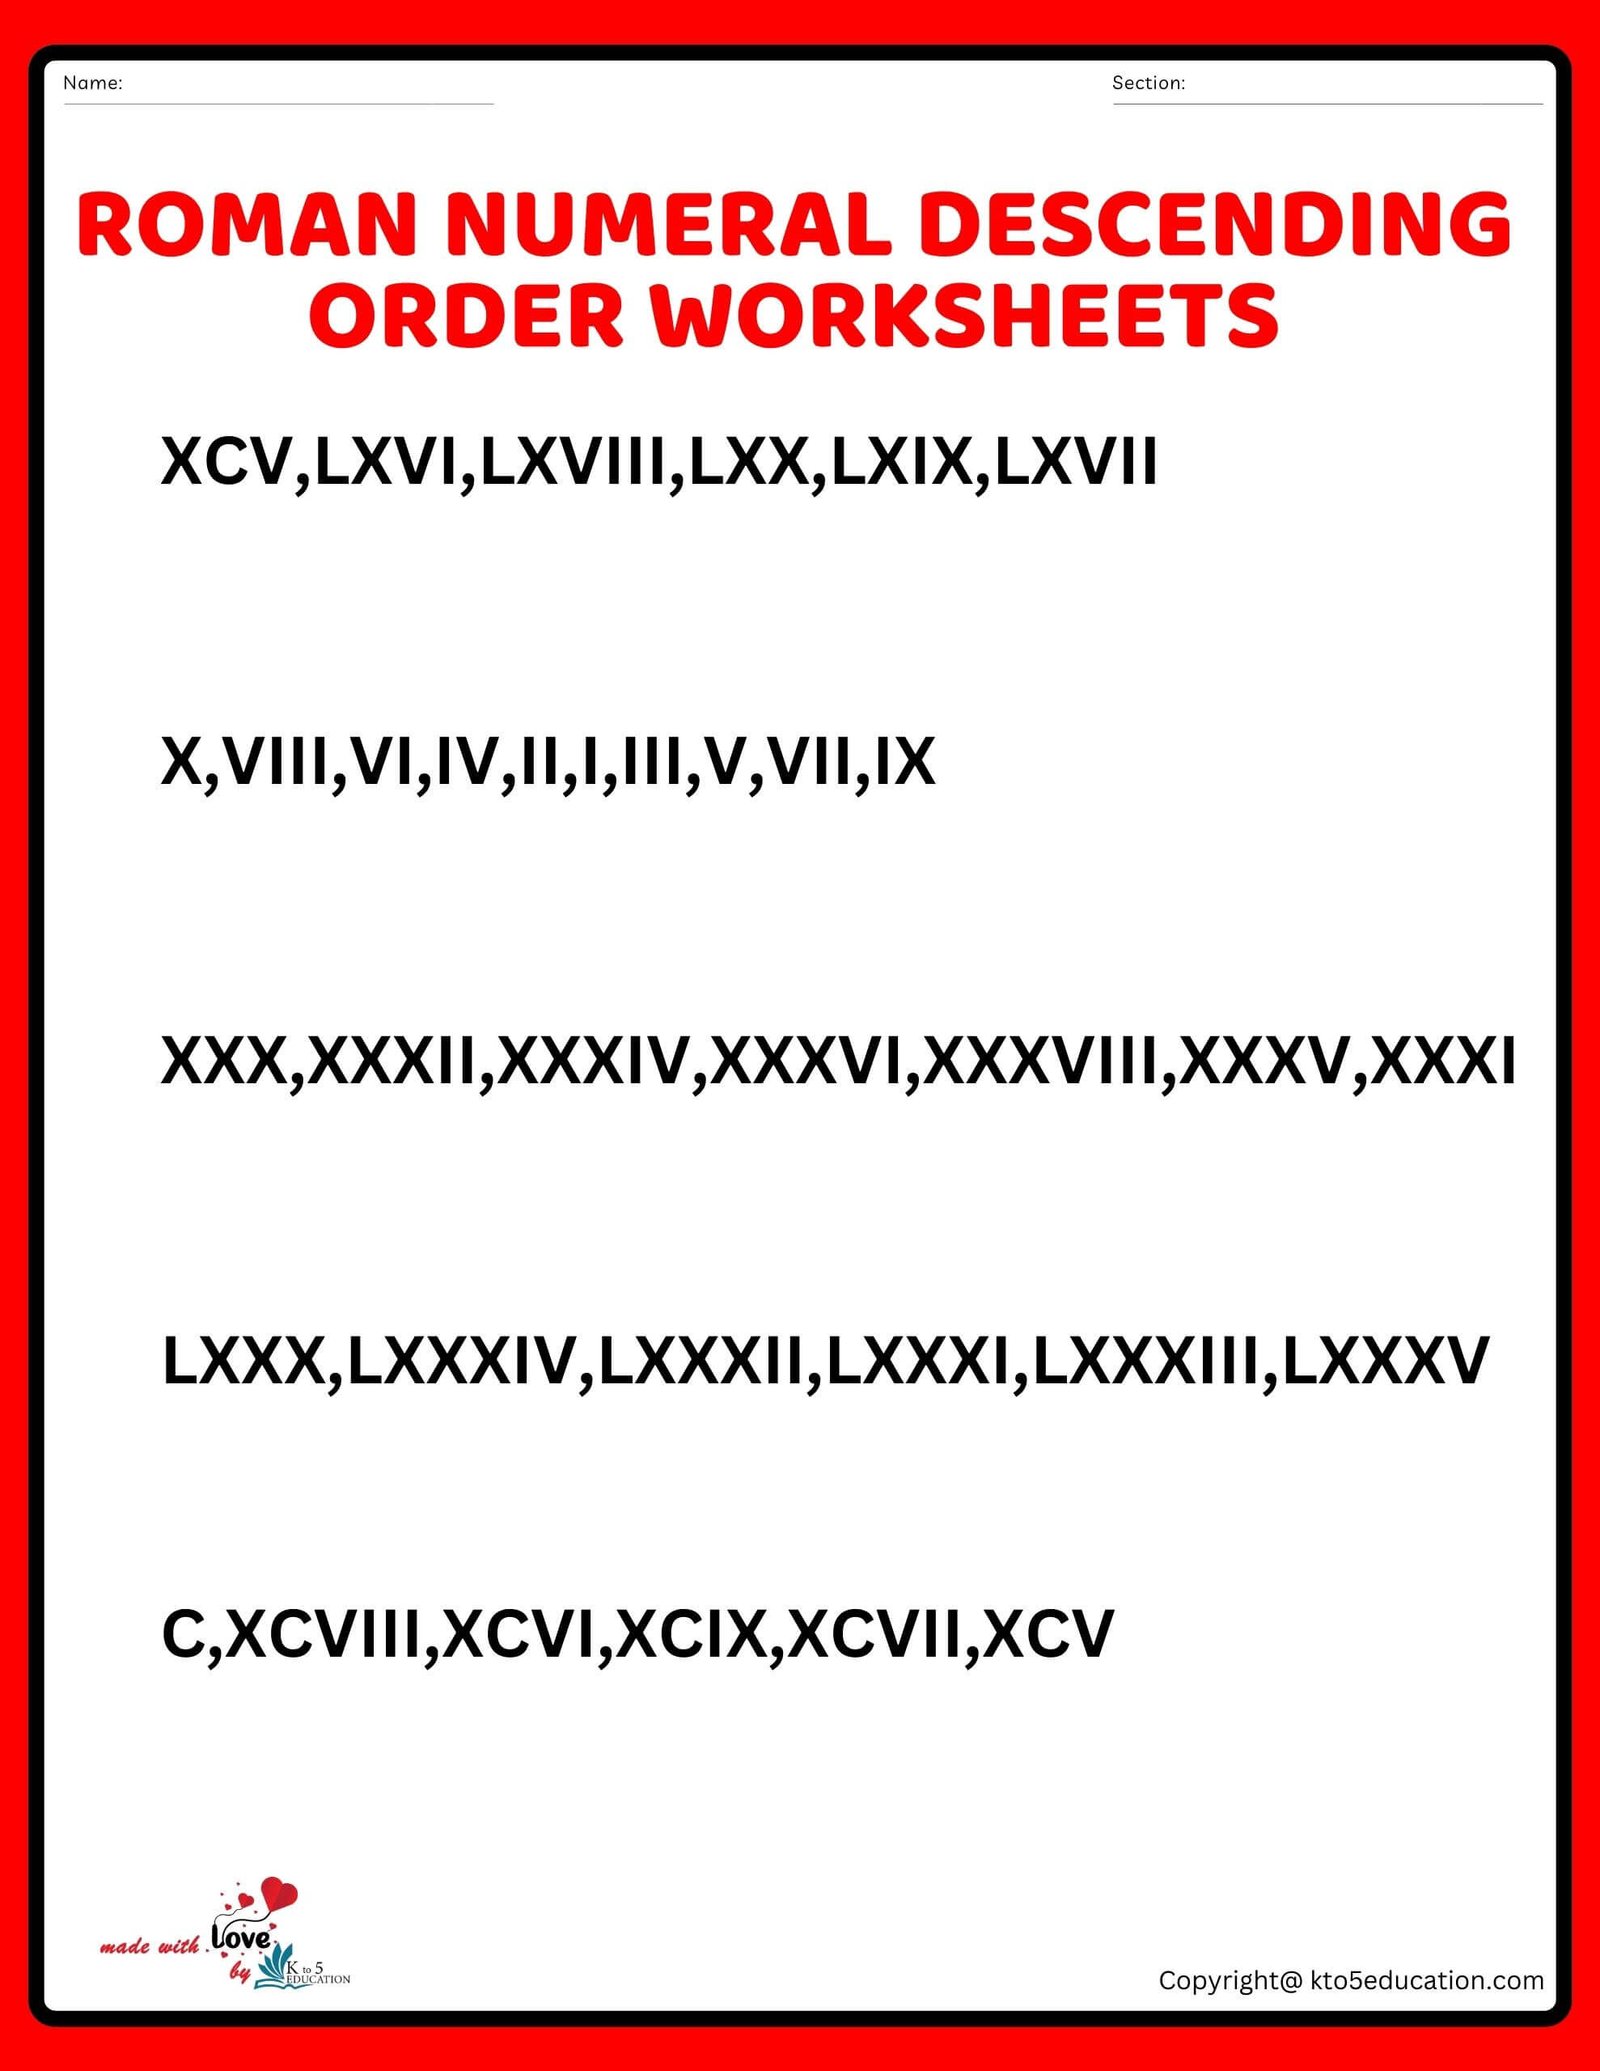 Roman Numeral Descending Ordering Worksheets Grade 5 1 to 100